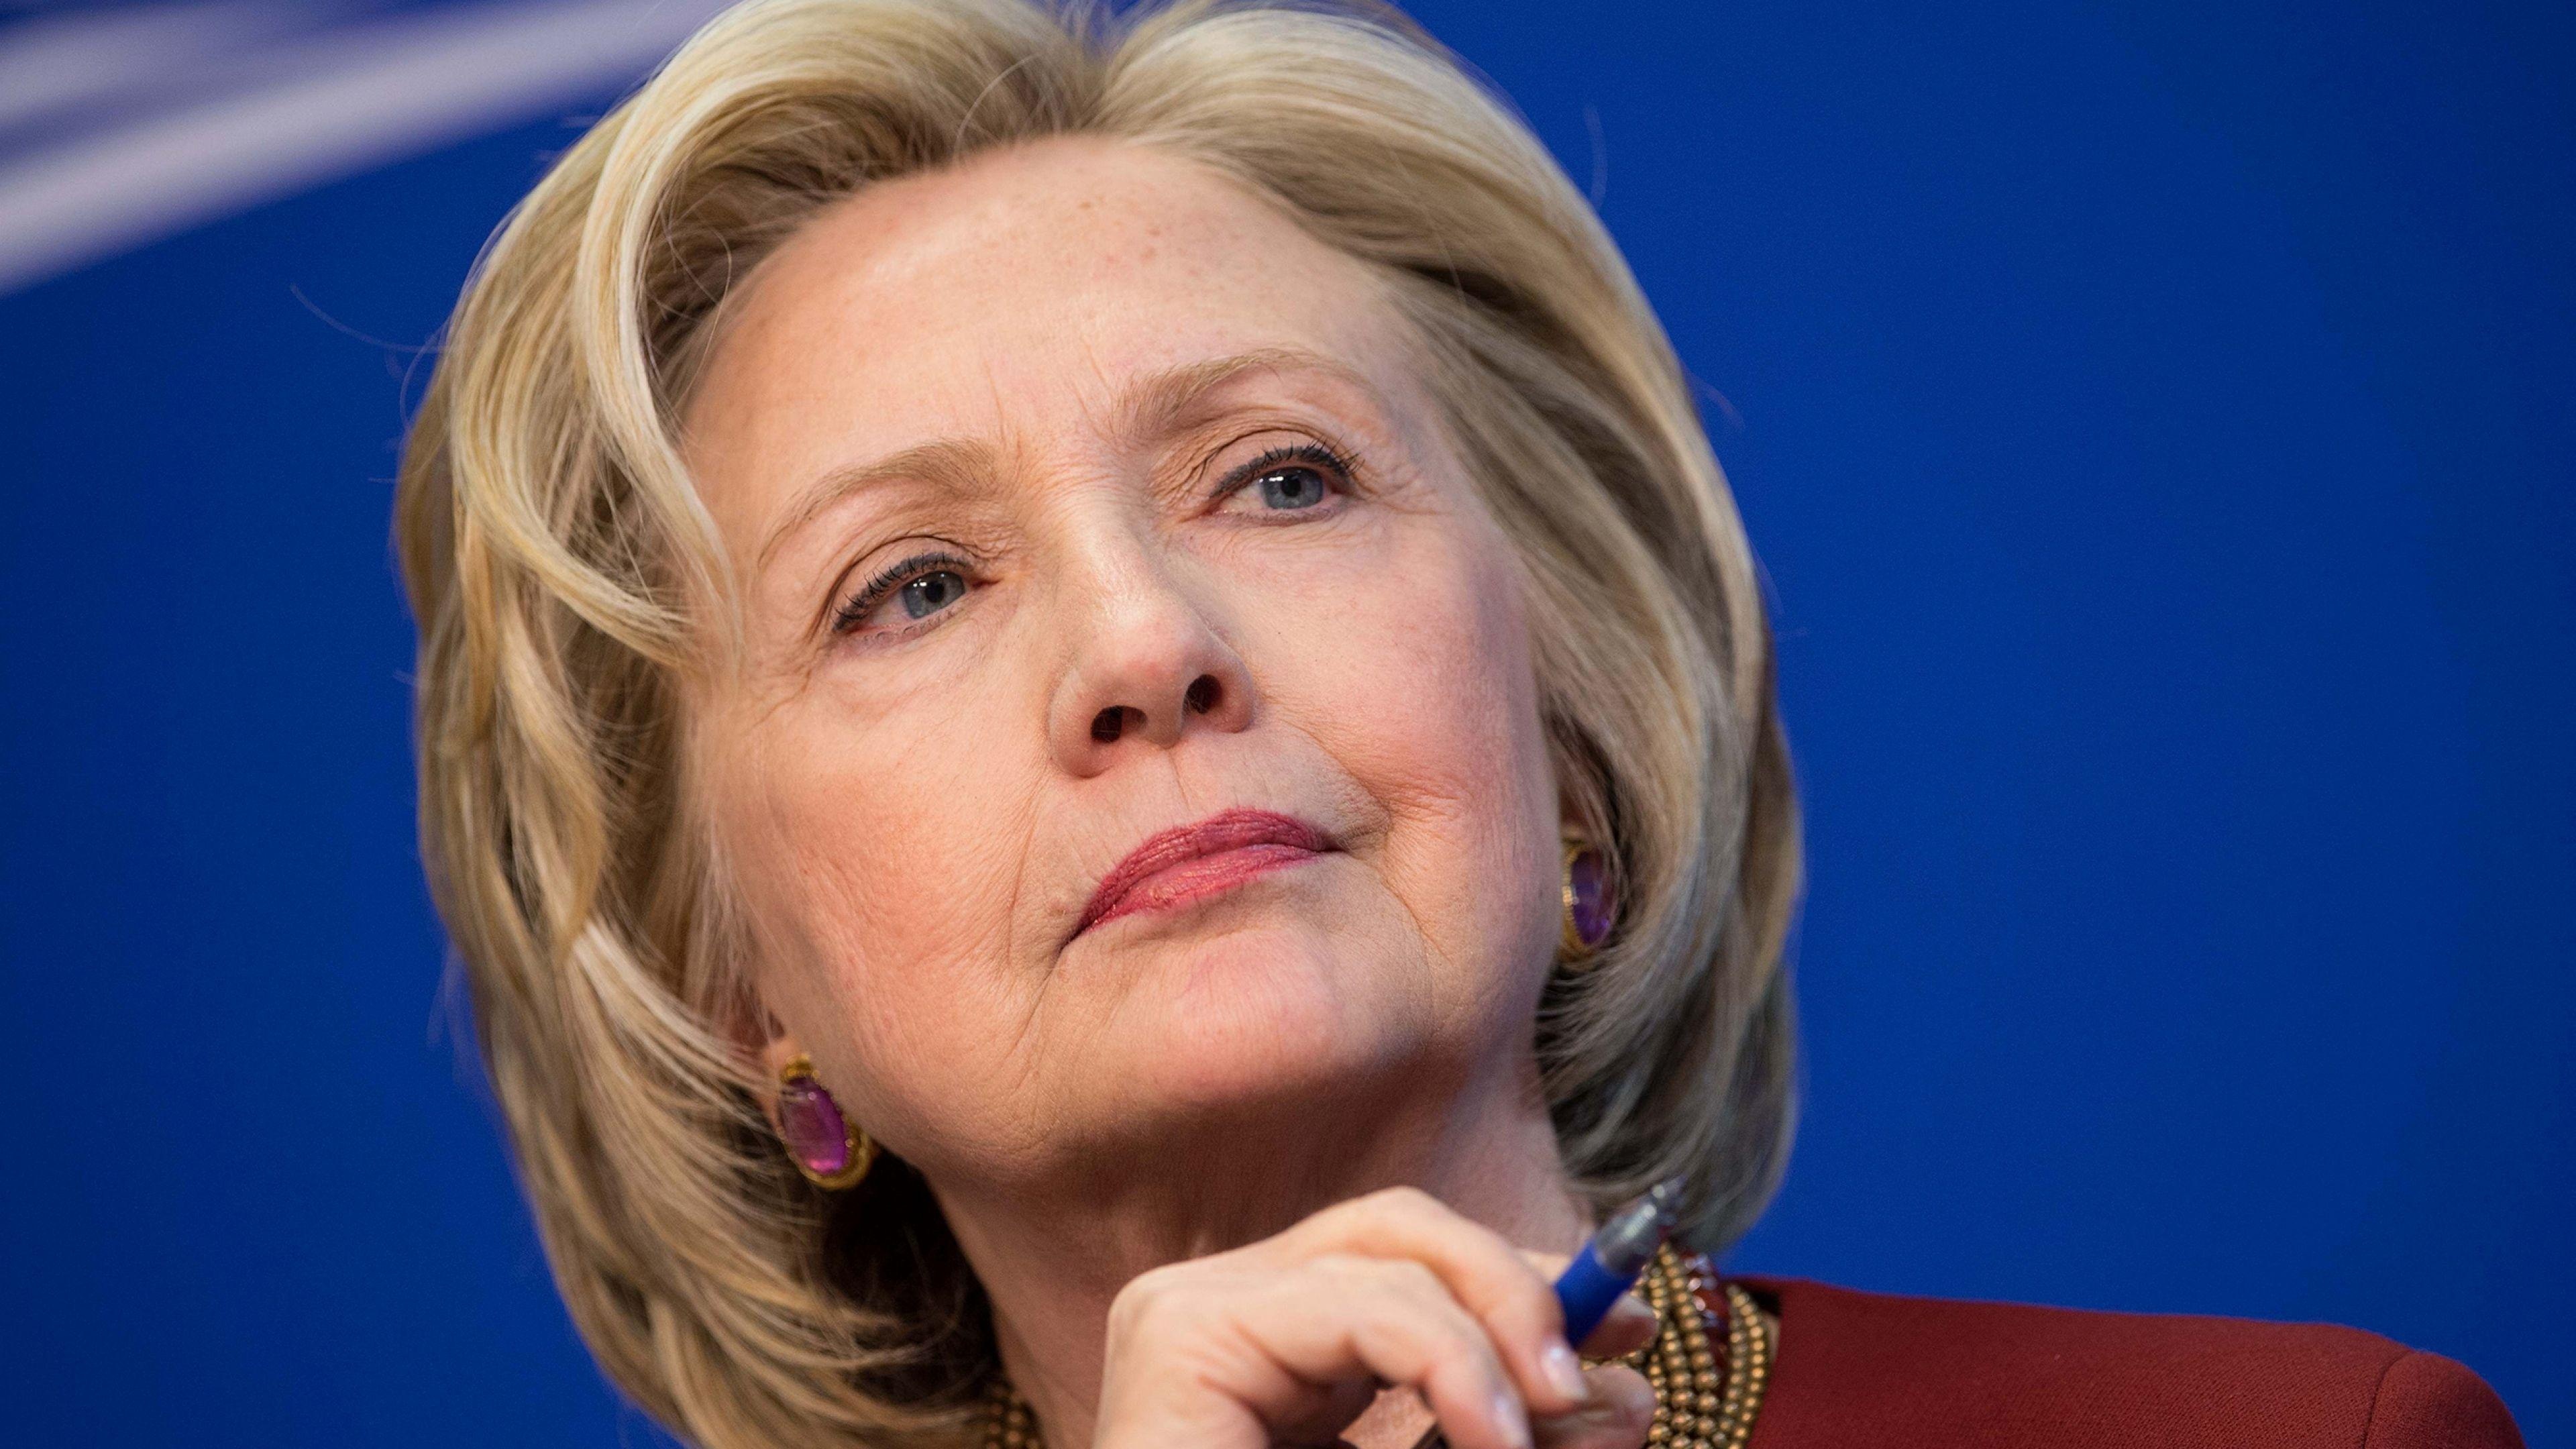 Hillary Clinton, Political figure, Presidential candidate, Public figure, 3840x2160 4K Desktop